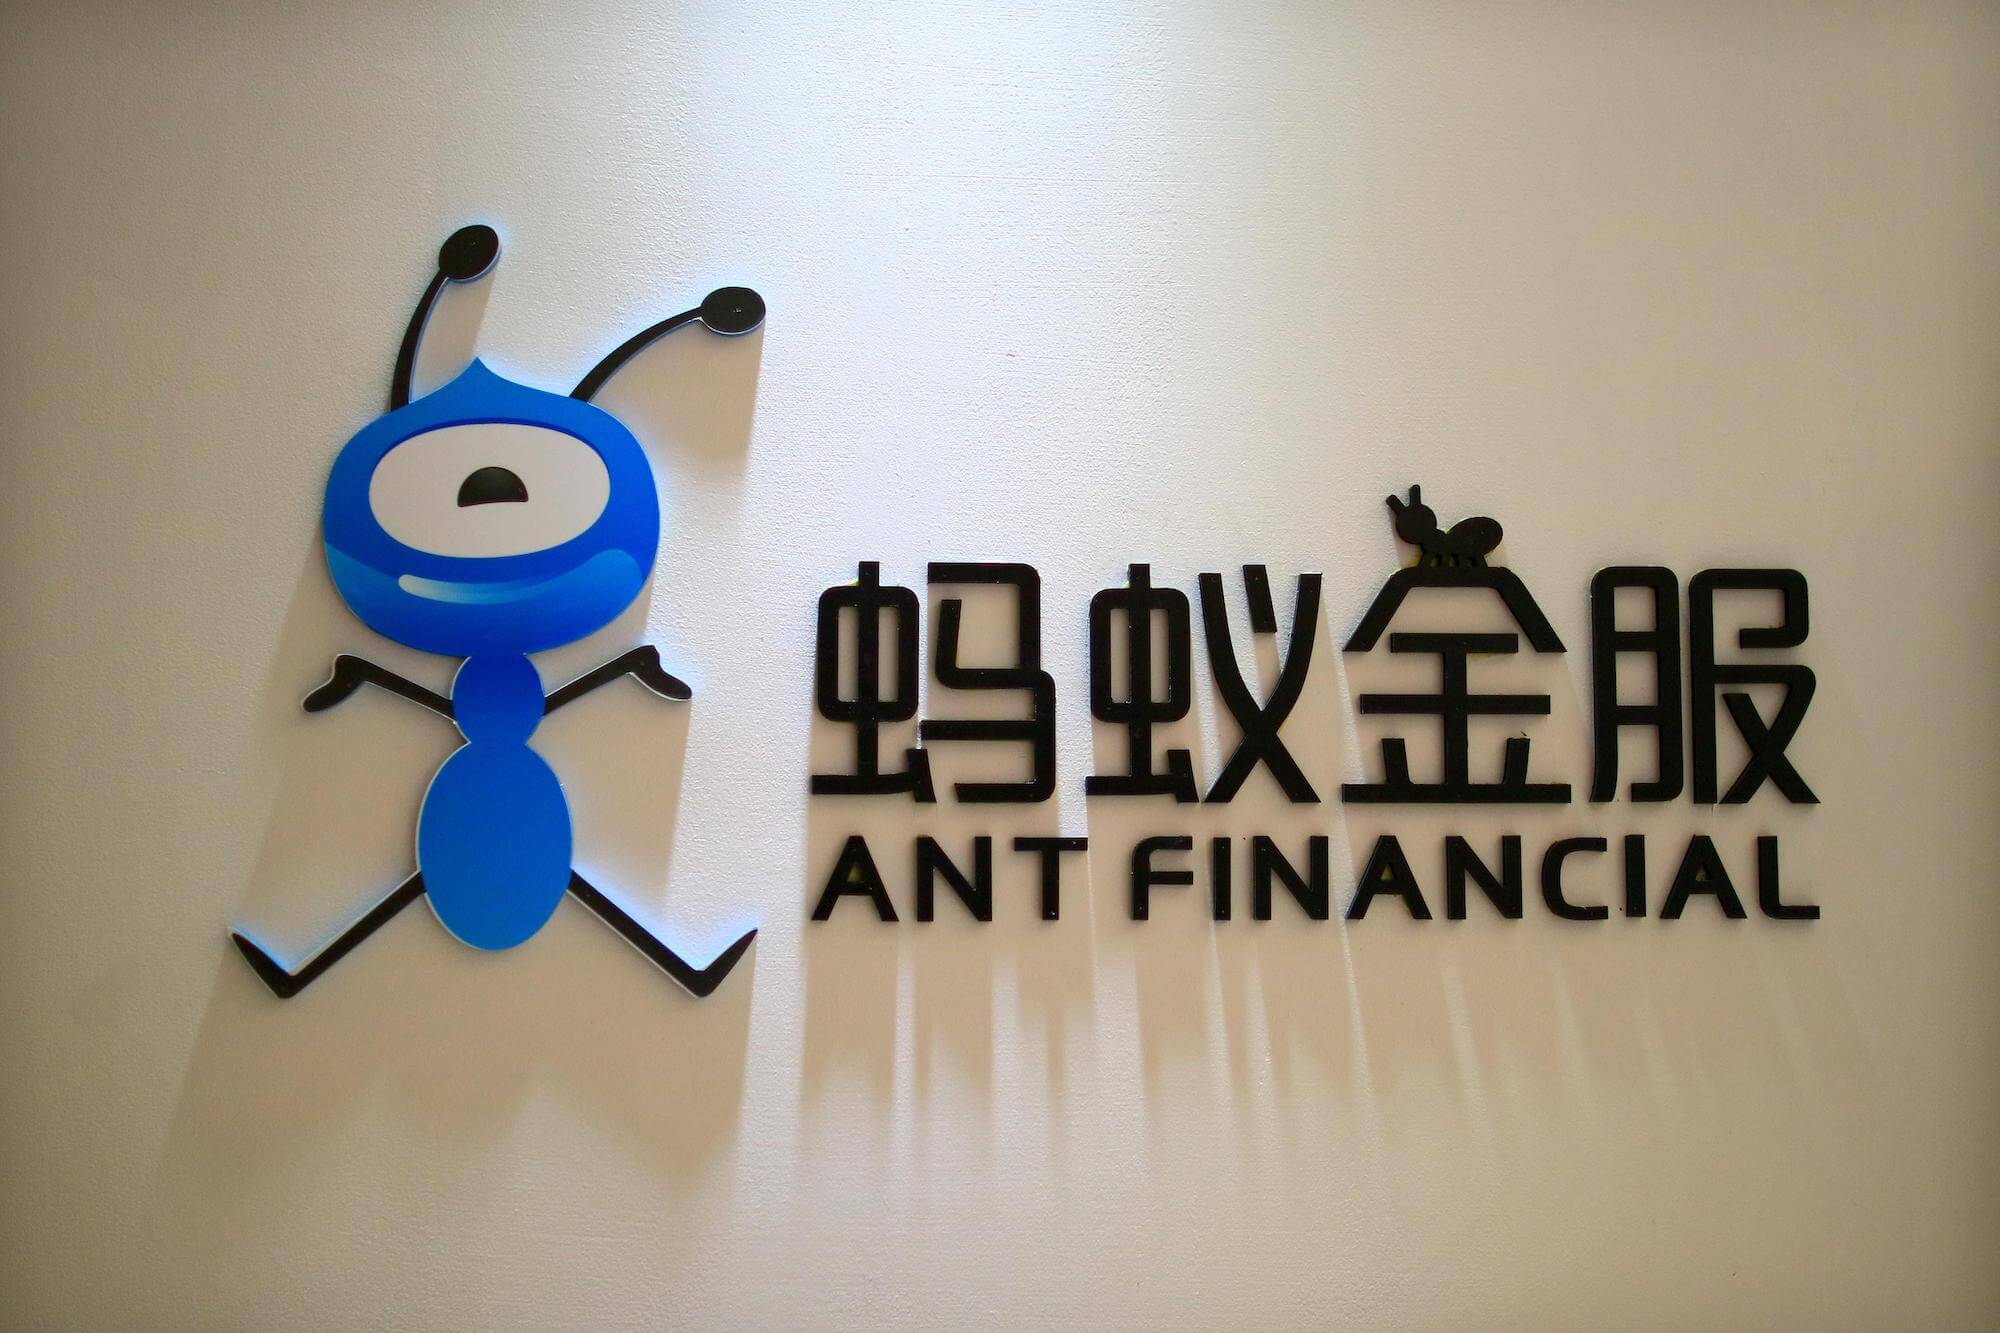 ant financial blockchain